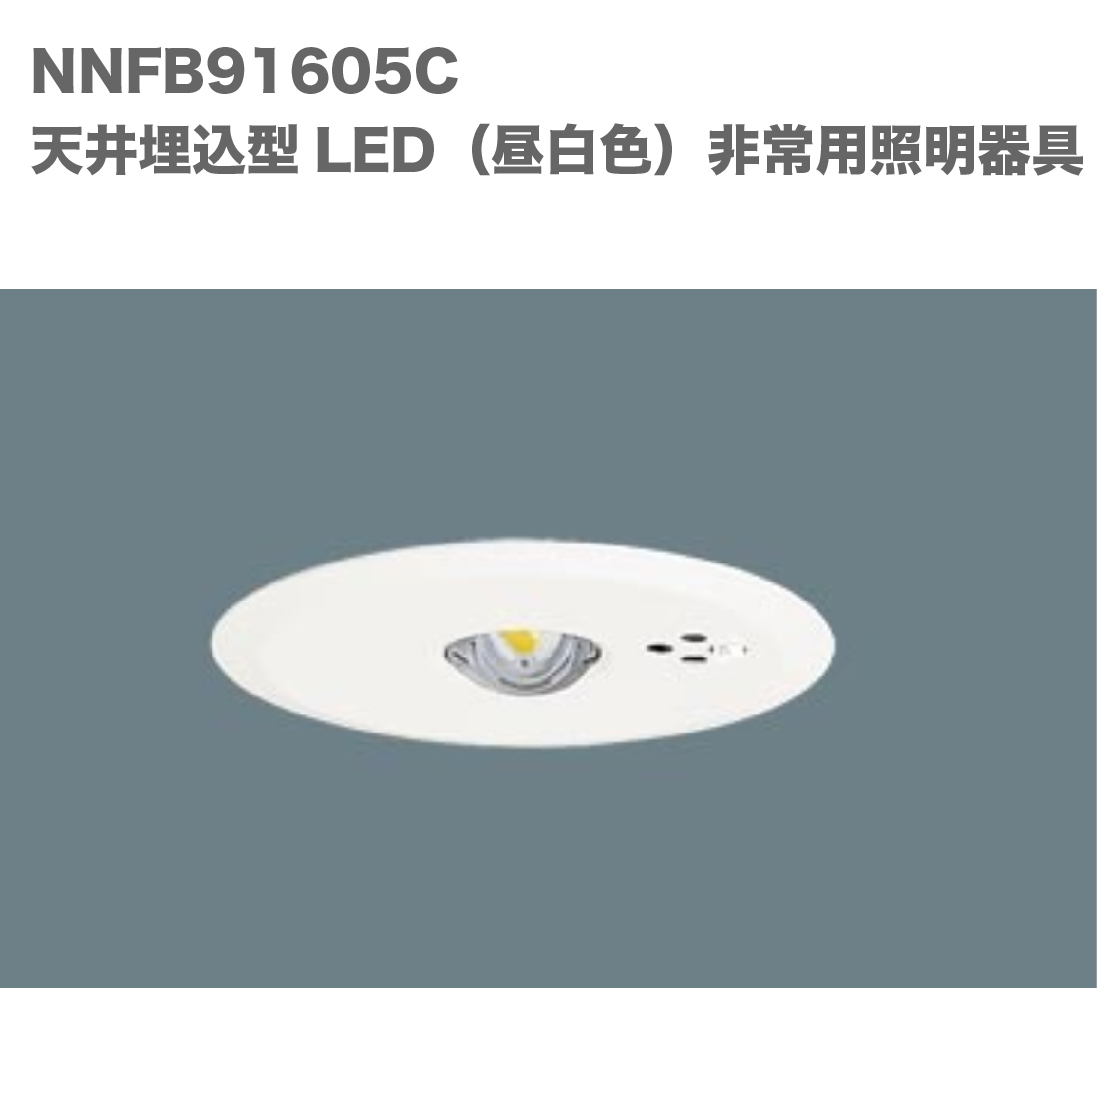 NNFB91605C 天井埋込型 LED（昼白色） 非常用照明器具 30分間タイプ